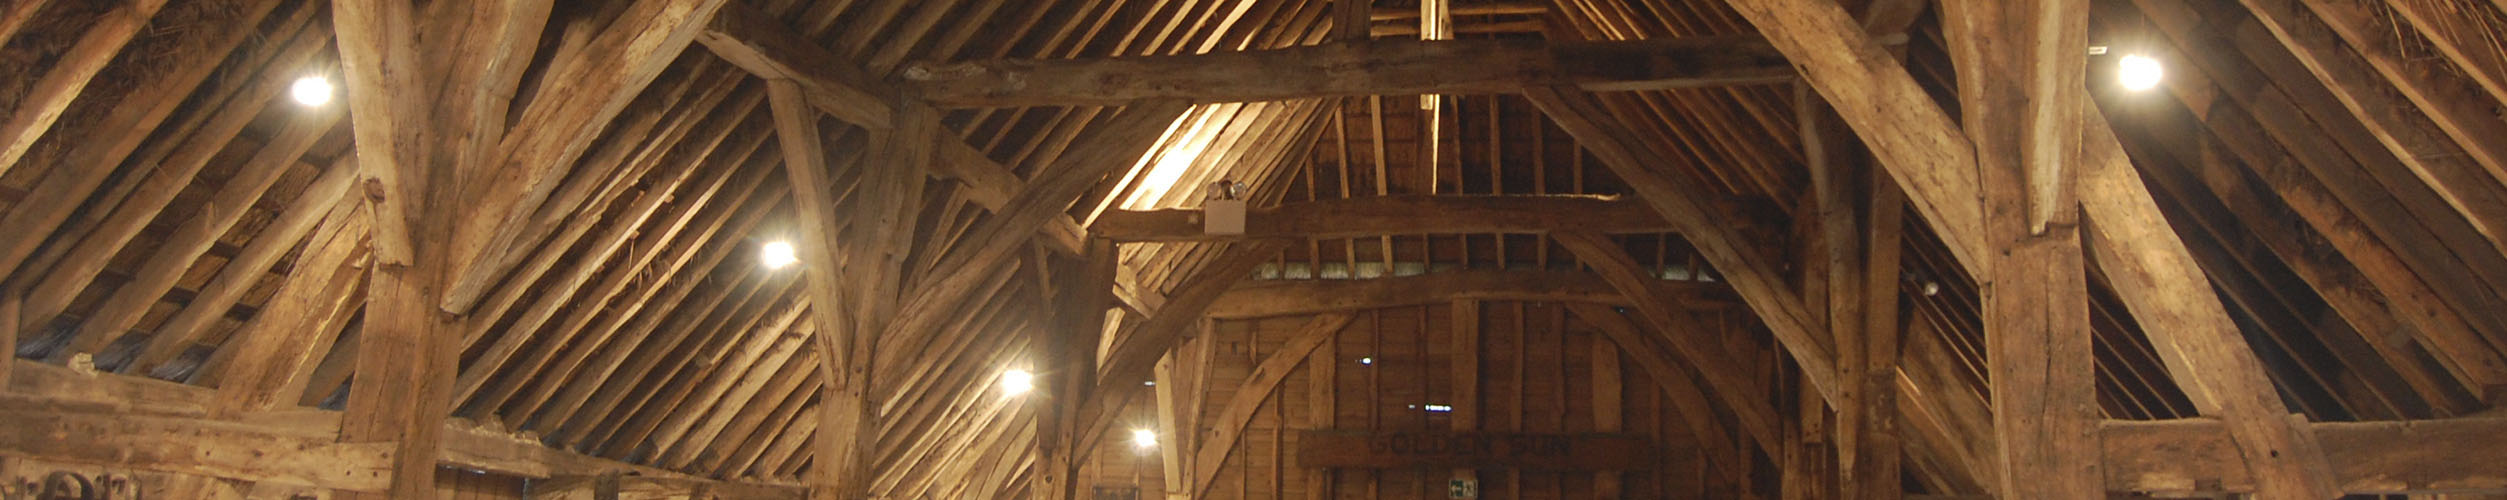 Interior of Harmondsworth Barn, Hillingdon